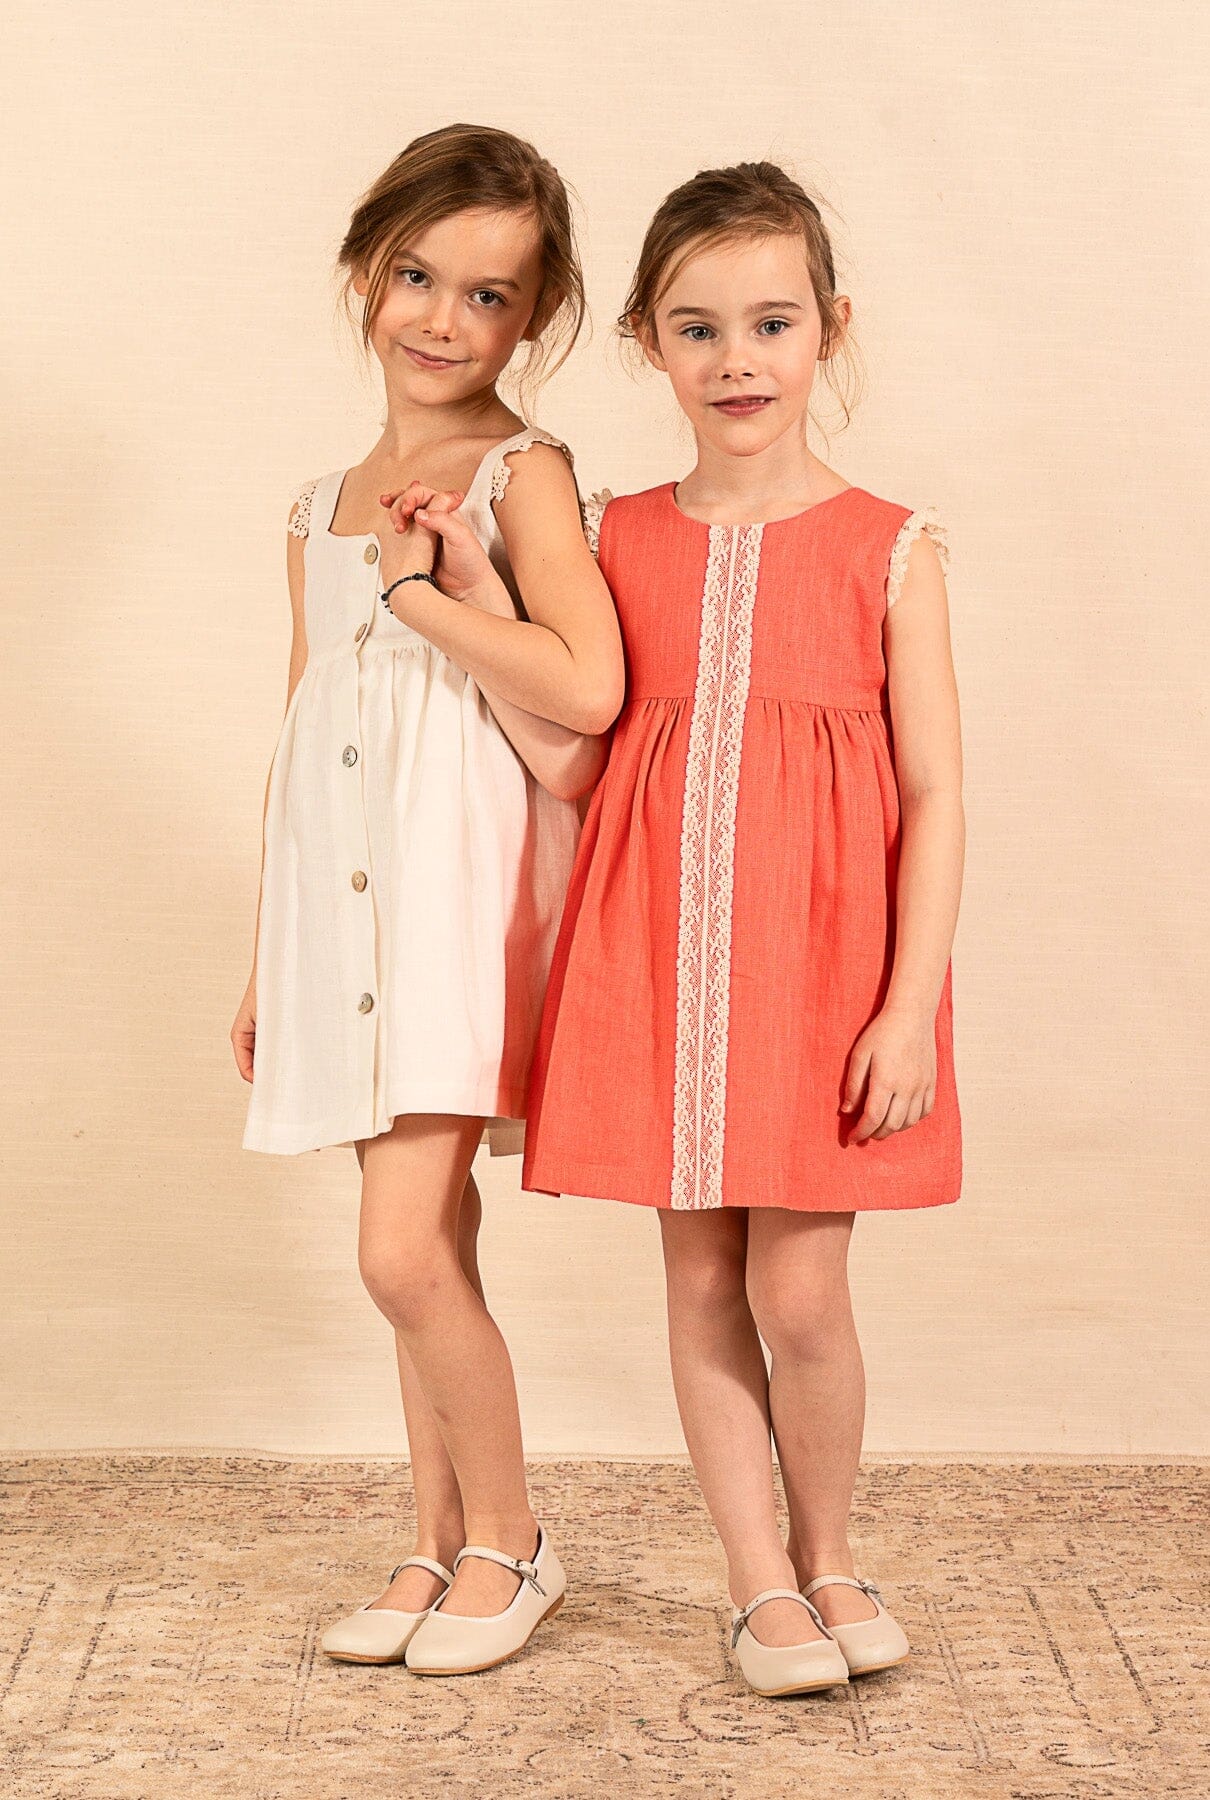 Victoire Dress Off White Kids Clothing Amaia London 